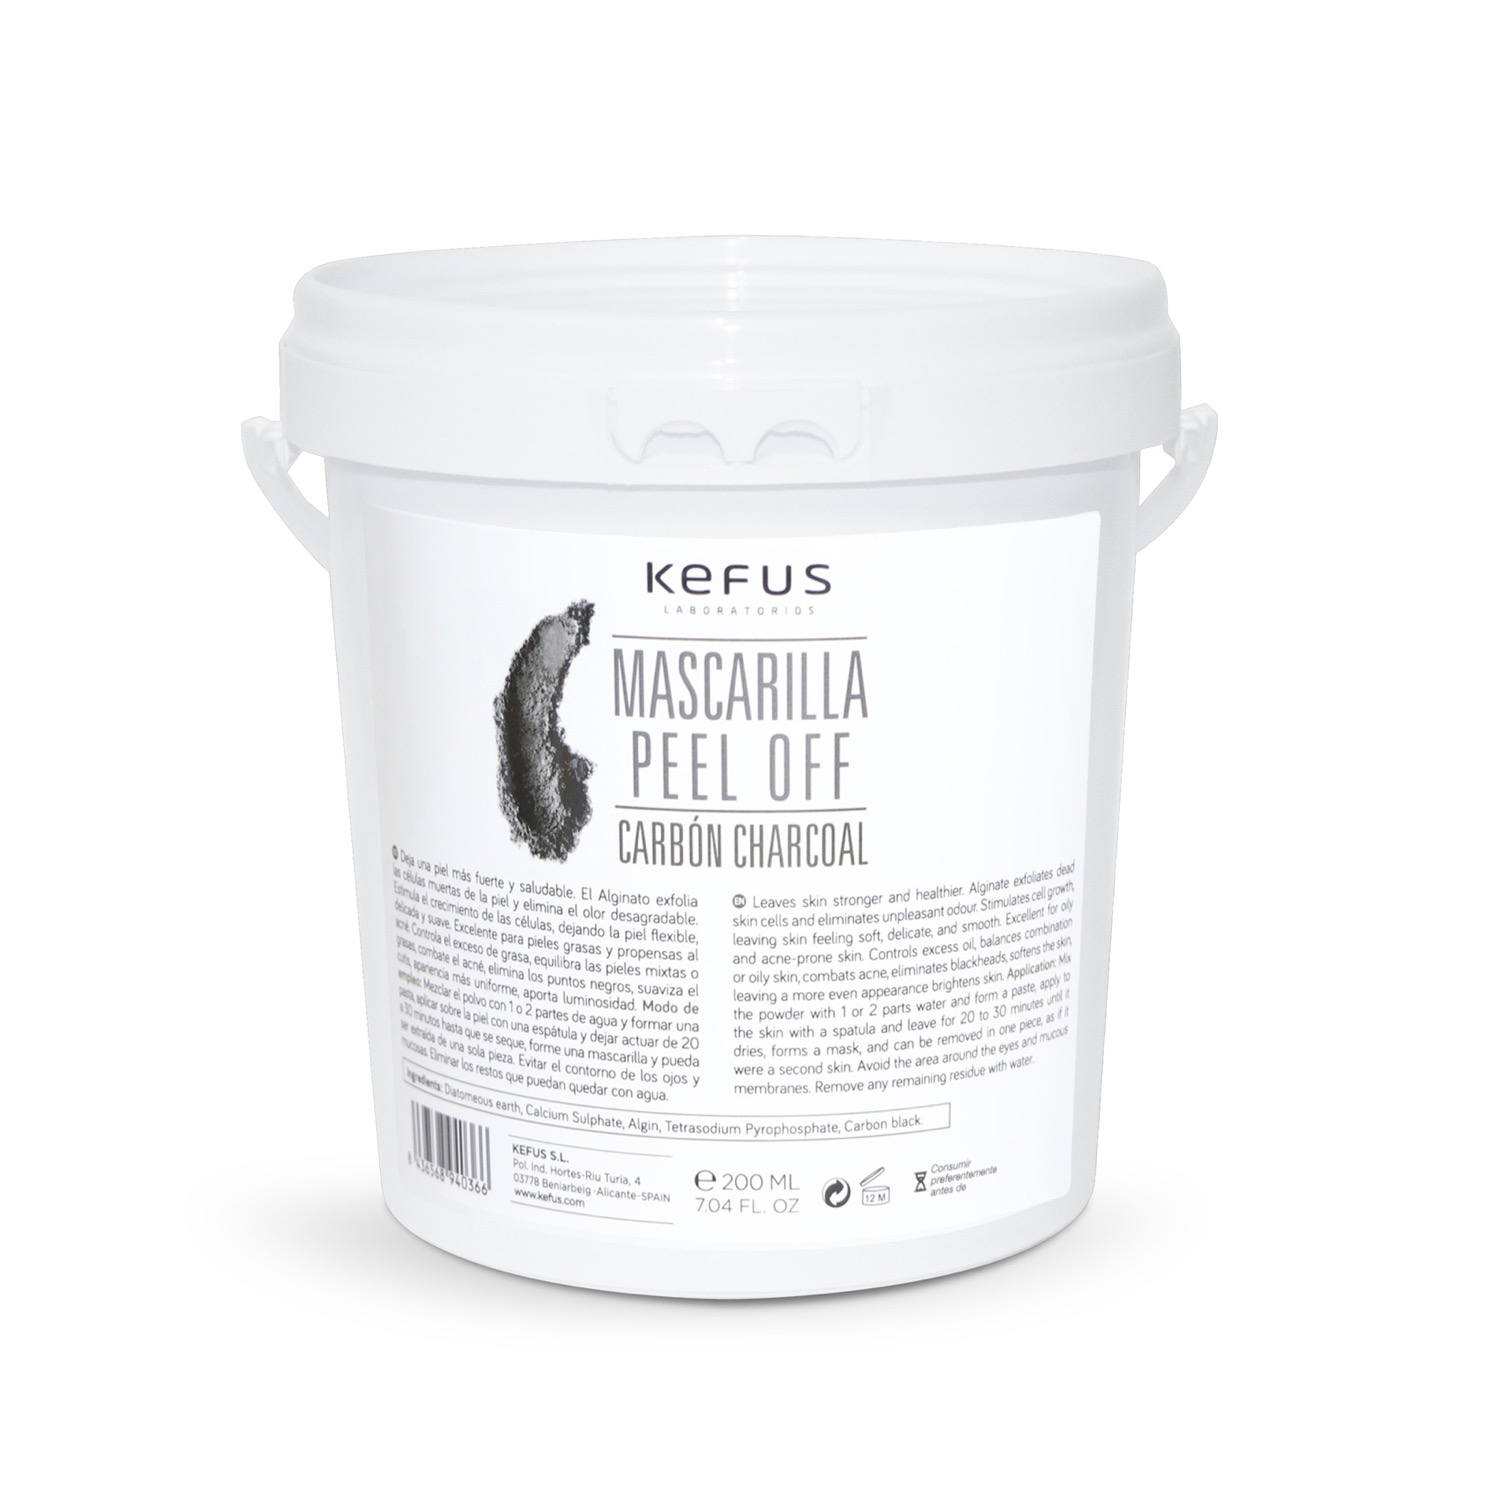 Mascarilla Peel Off Alginato Carbon Charcoal Kefus 500 g